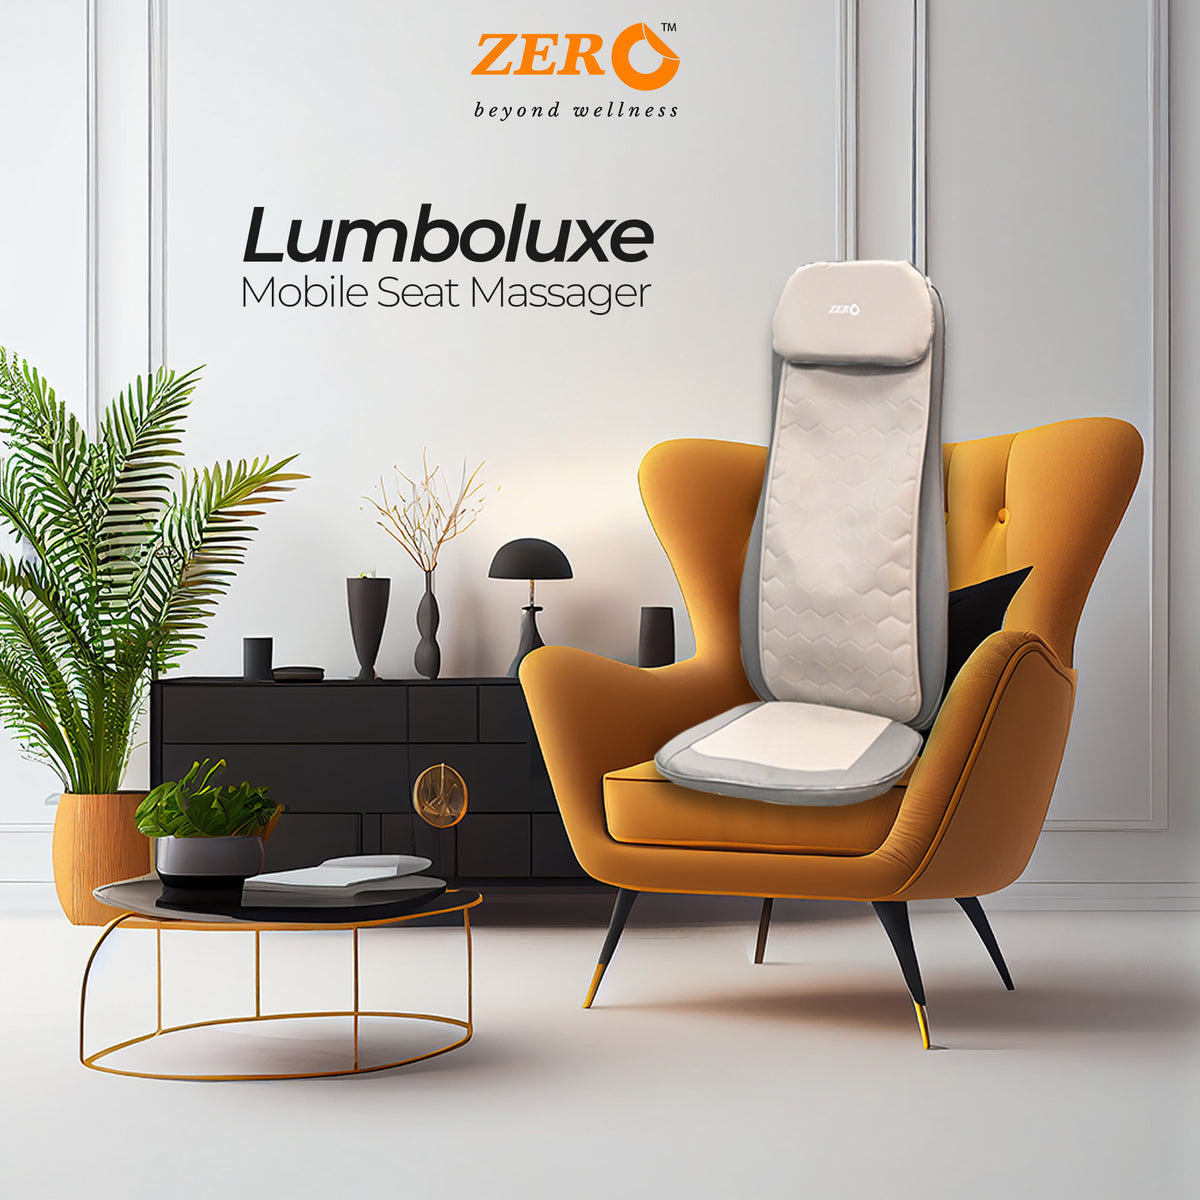 Lumbolux Mobile Seat